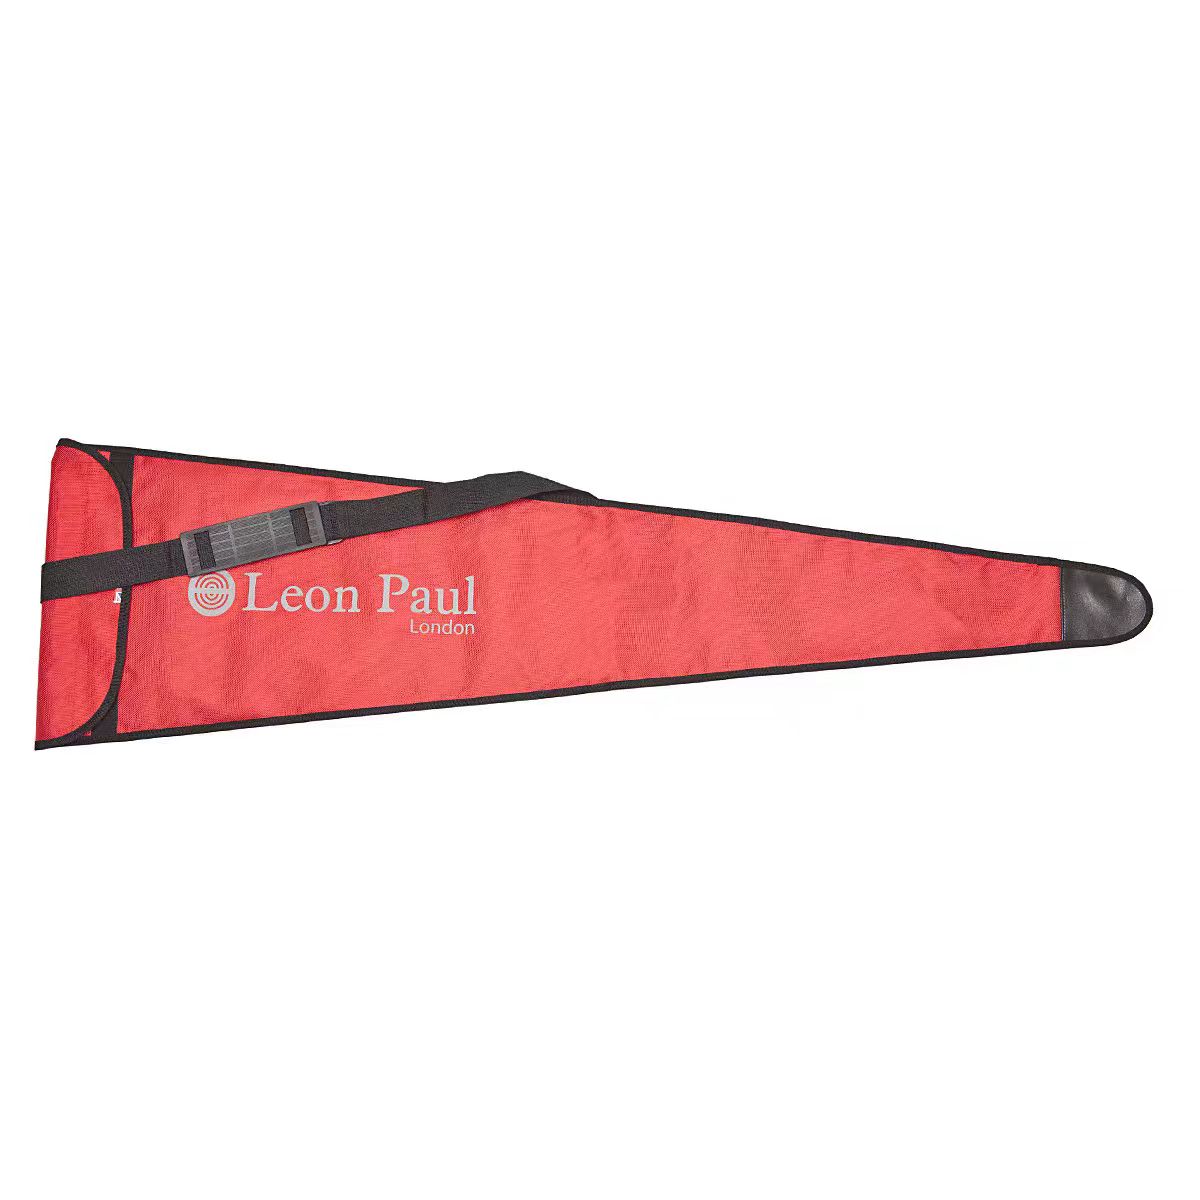 LeonPaul 保罗击剑 整剑保护袋Duel Weapon Bag 双剑 整剑袋新款 - 图0